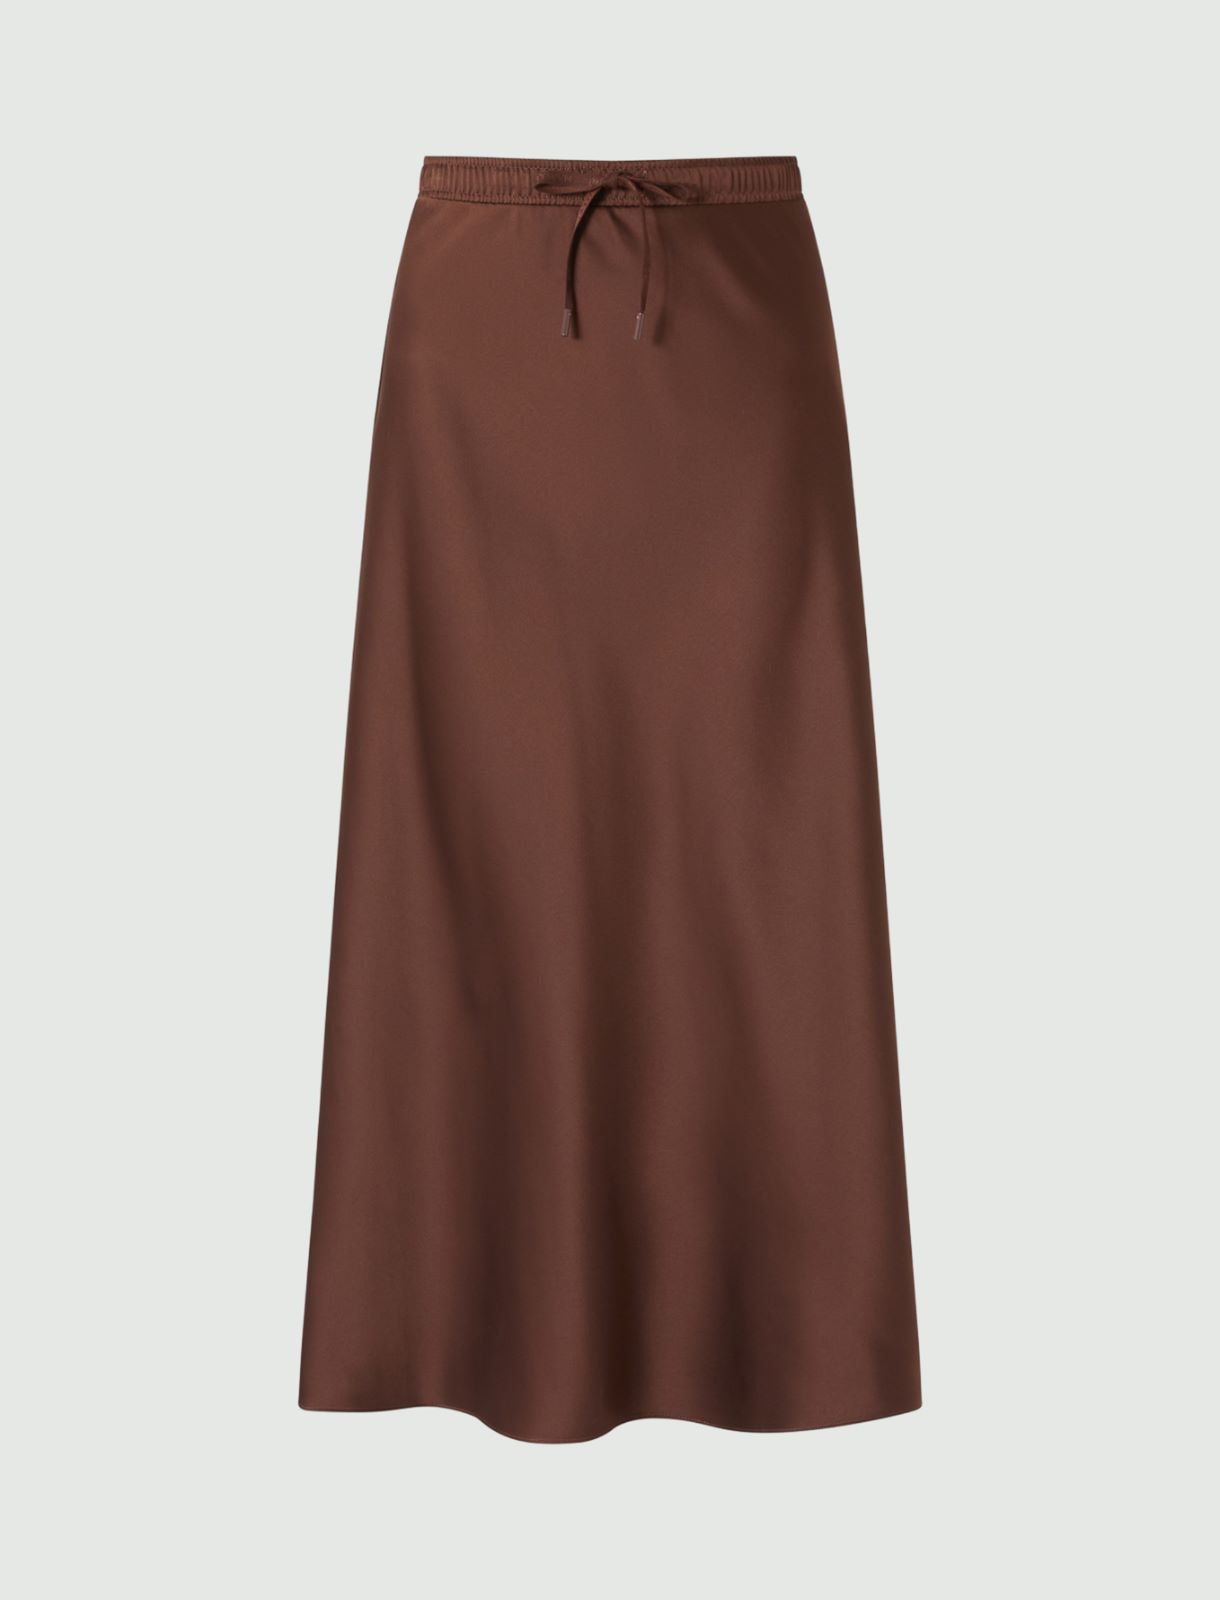 Satin skirt - Dark brown - Marella - 5